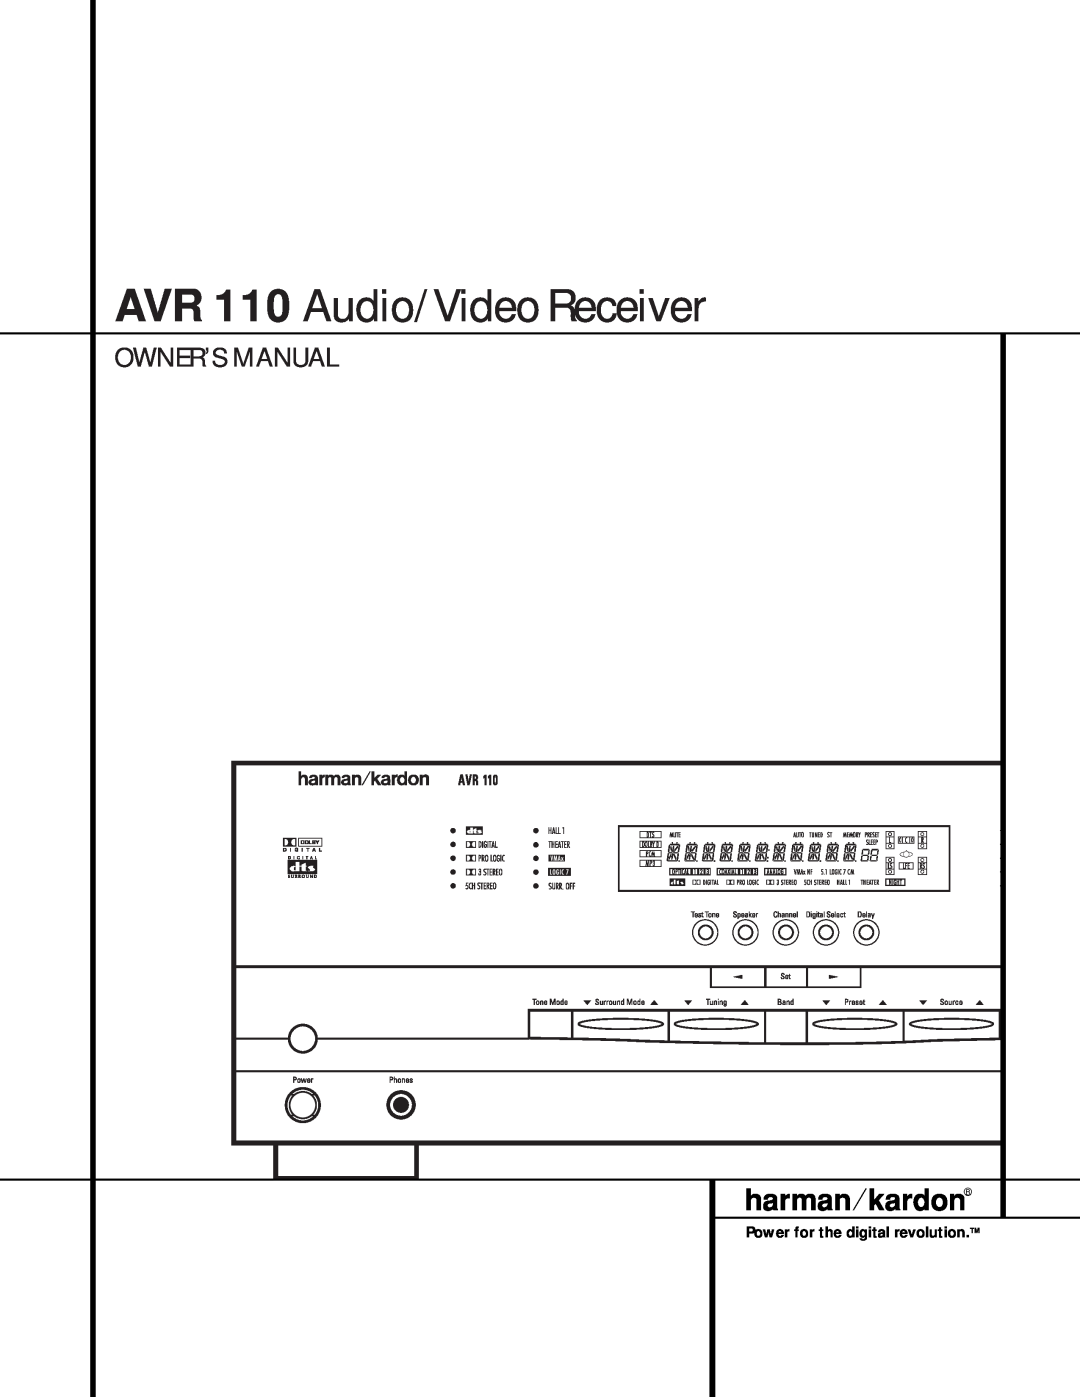 Harman-Kardon owner manual AVR 110 Audio/Video Receiver, Power for the digital revolution 